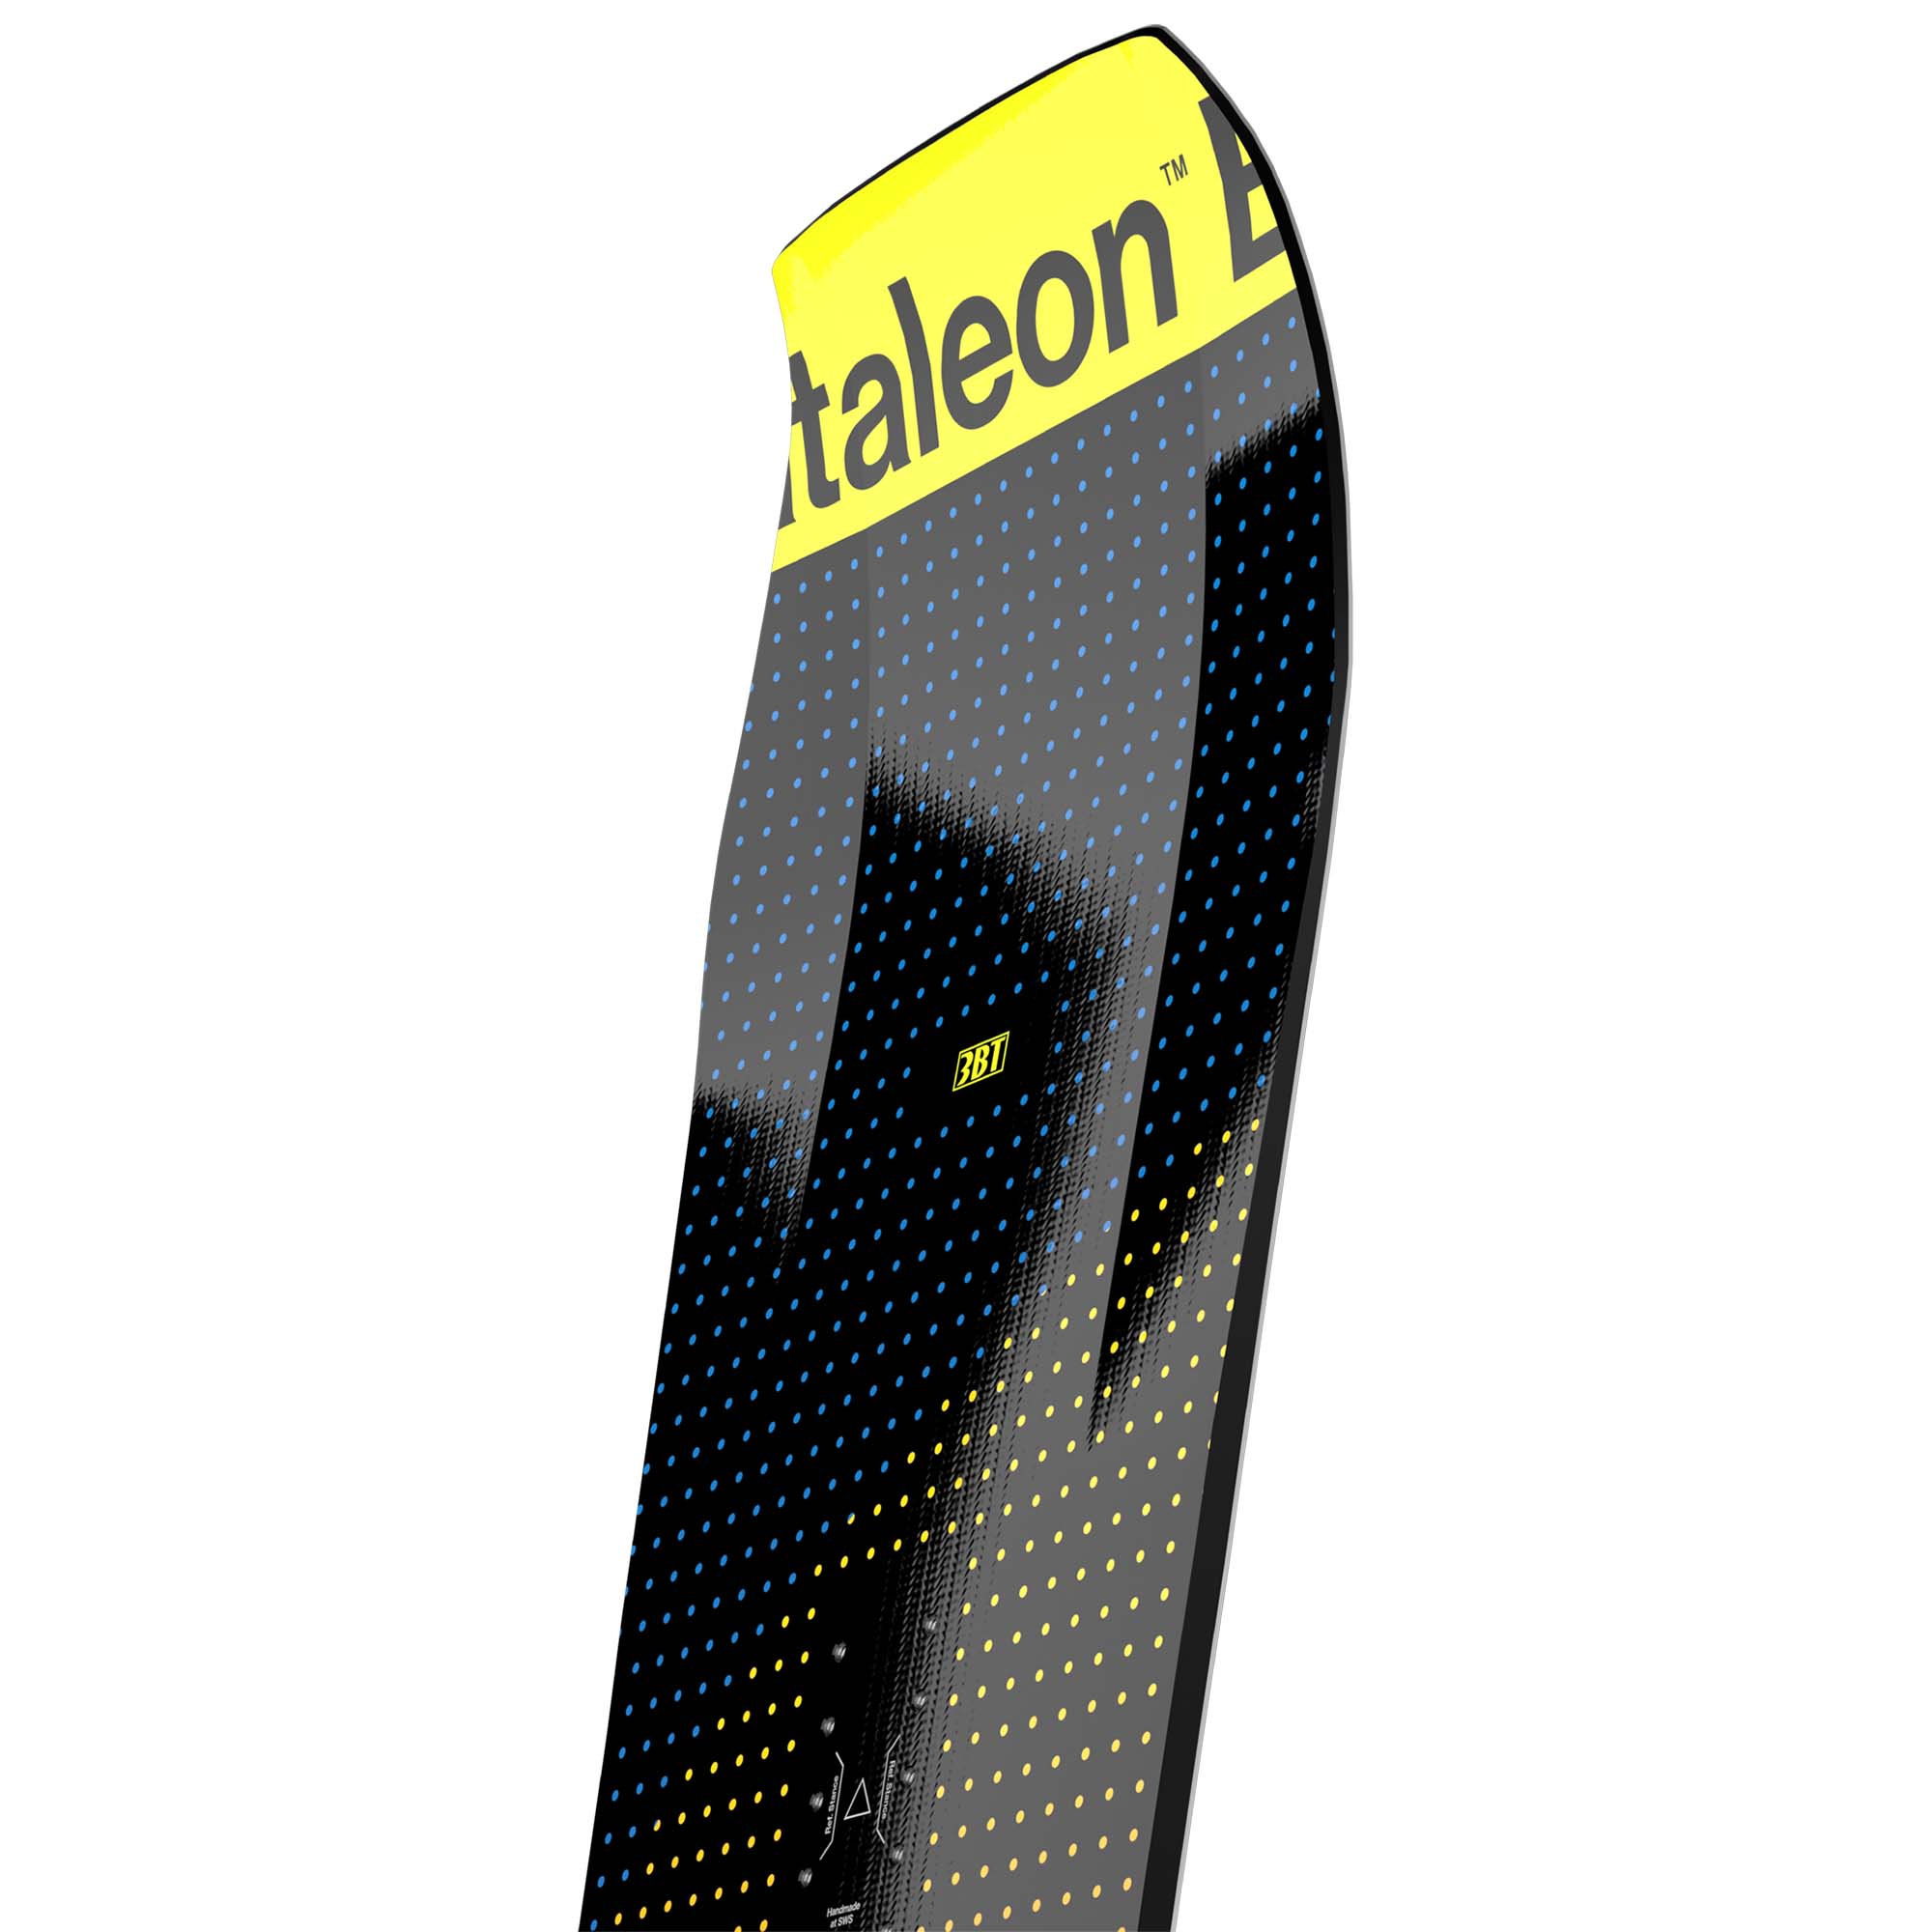 Bataleon Wallie Freestyle/Park Snowboard